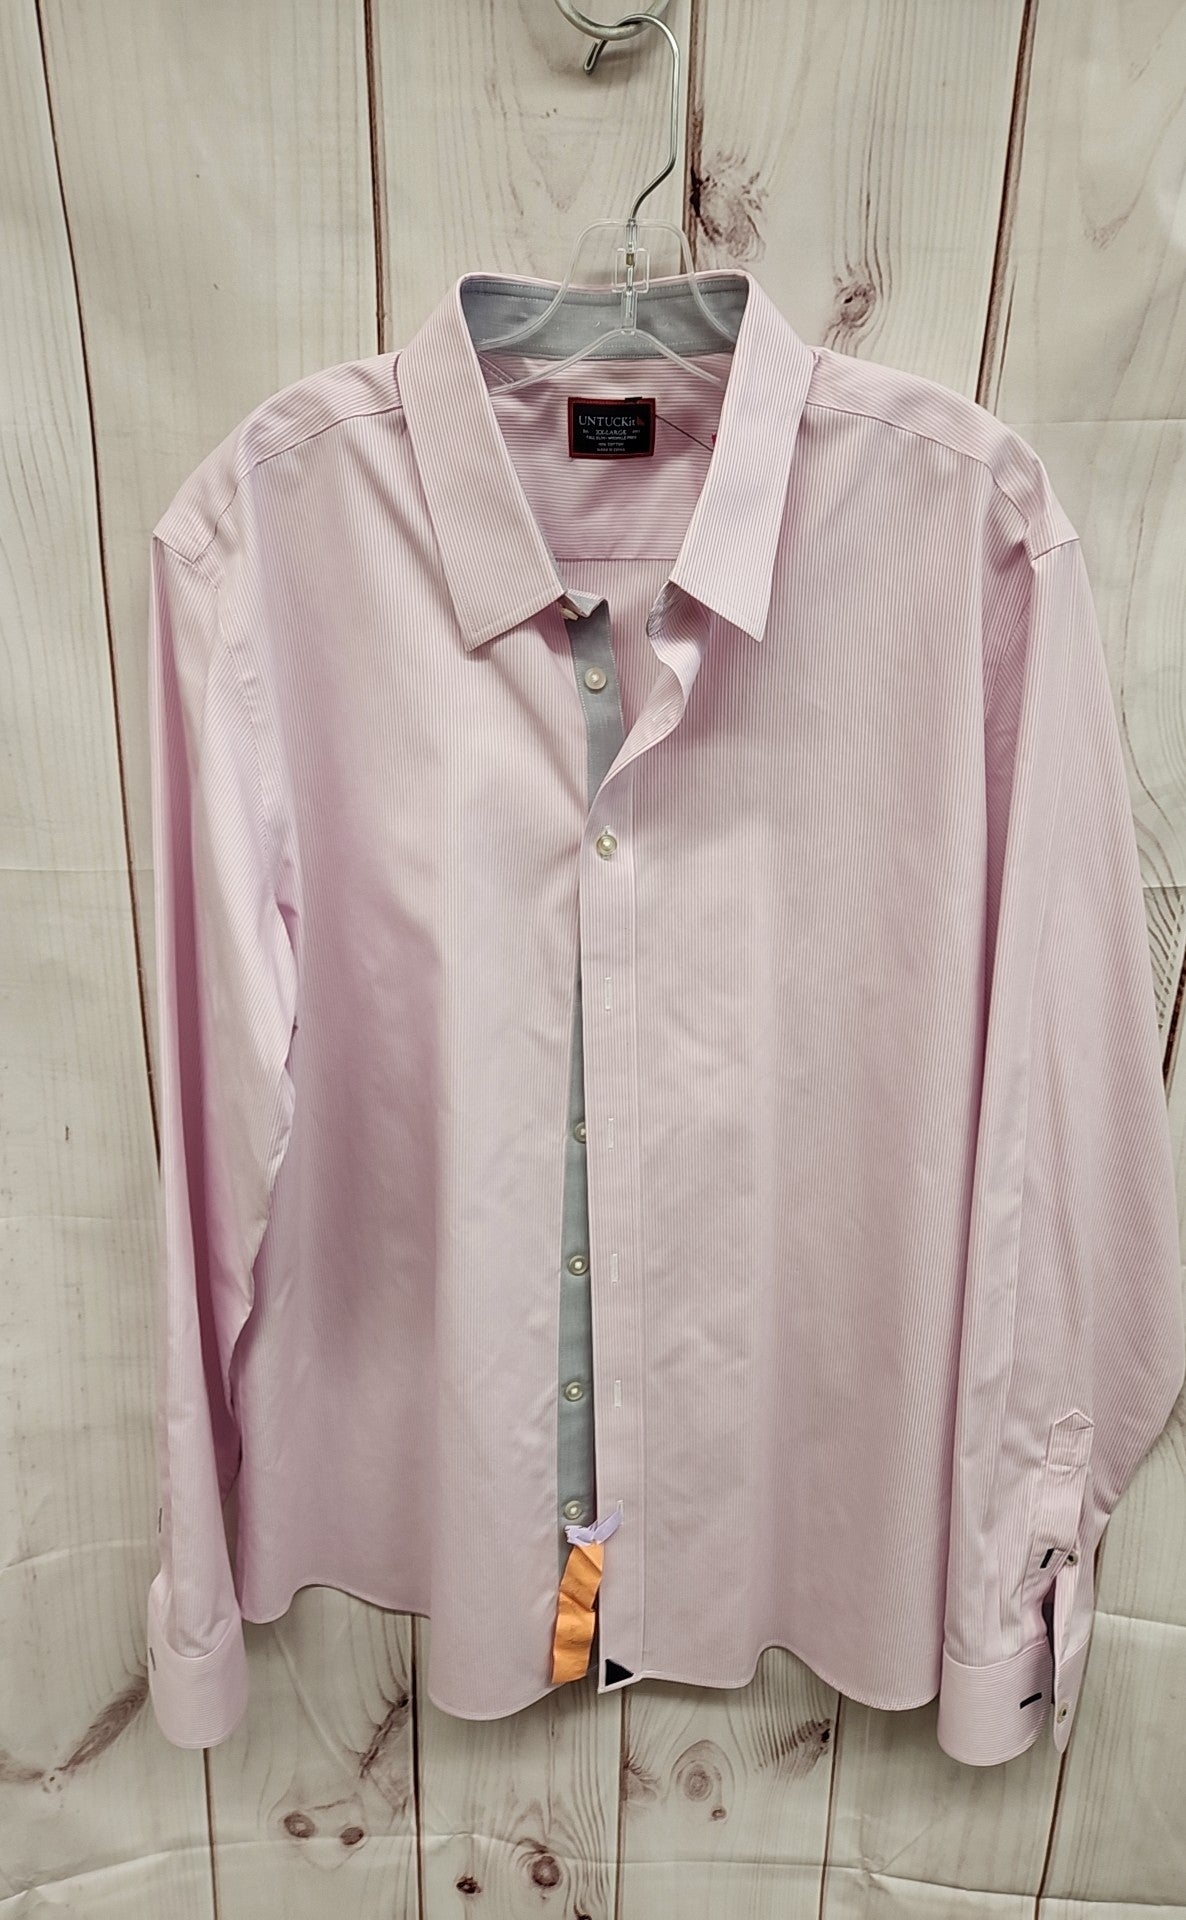 Untuckit Men's Size XXL Pink Shirt